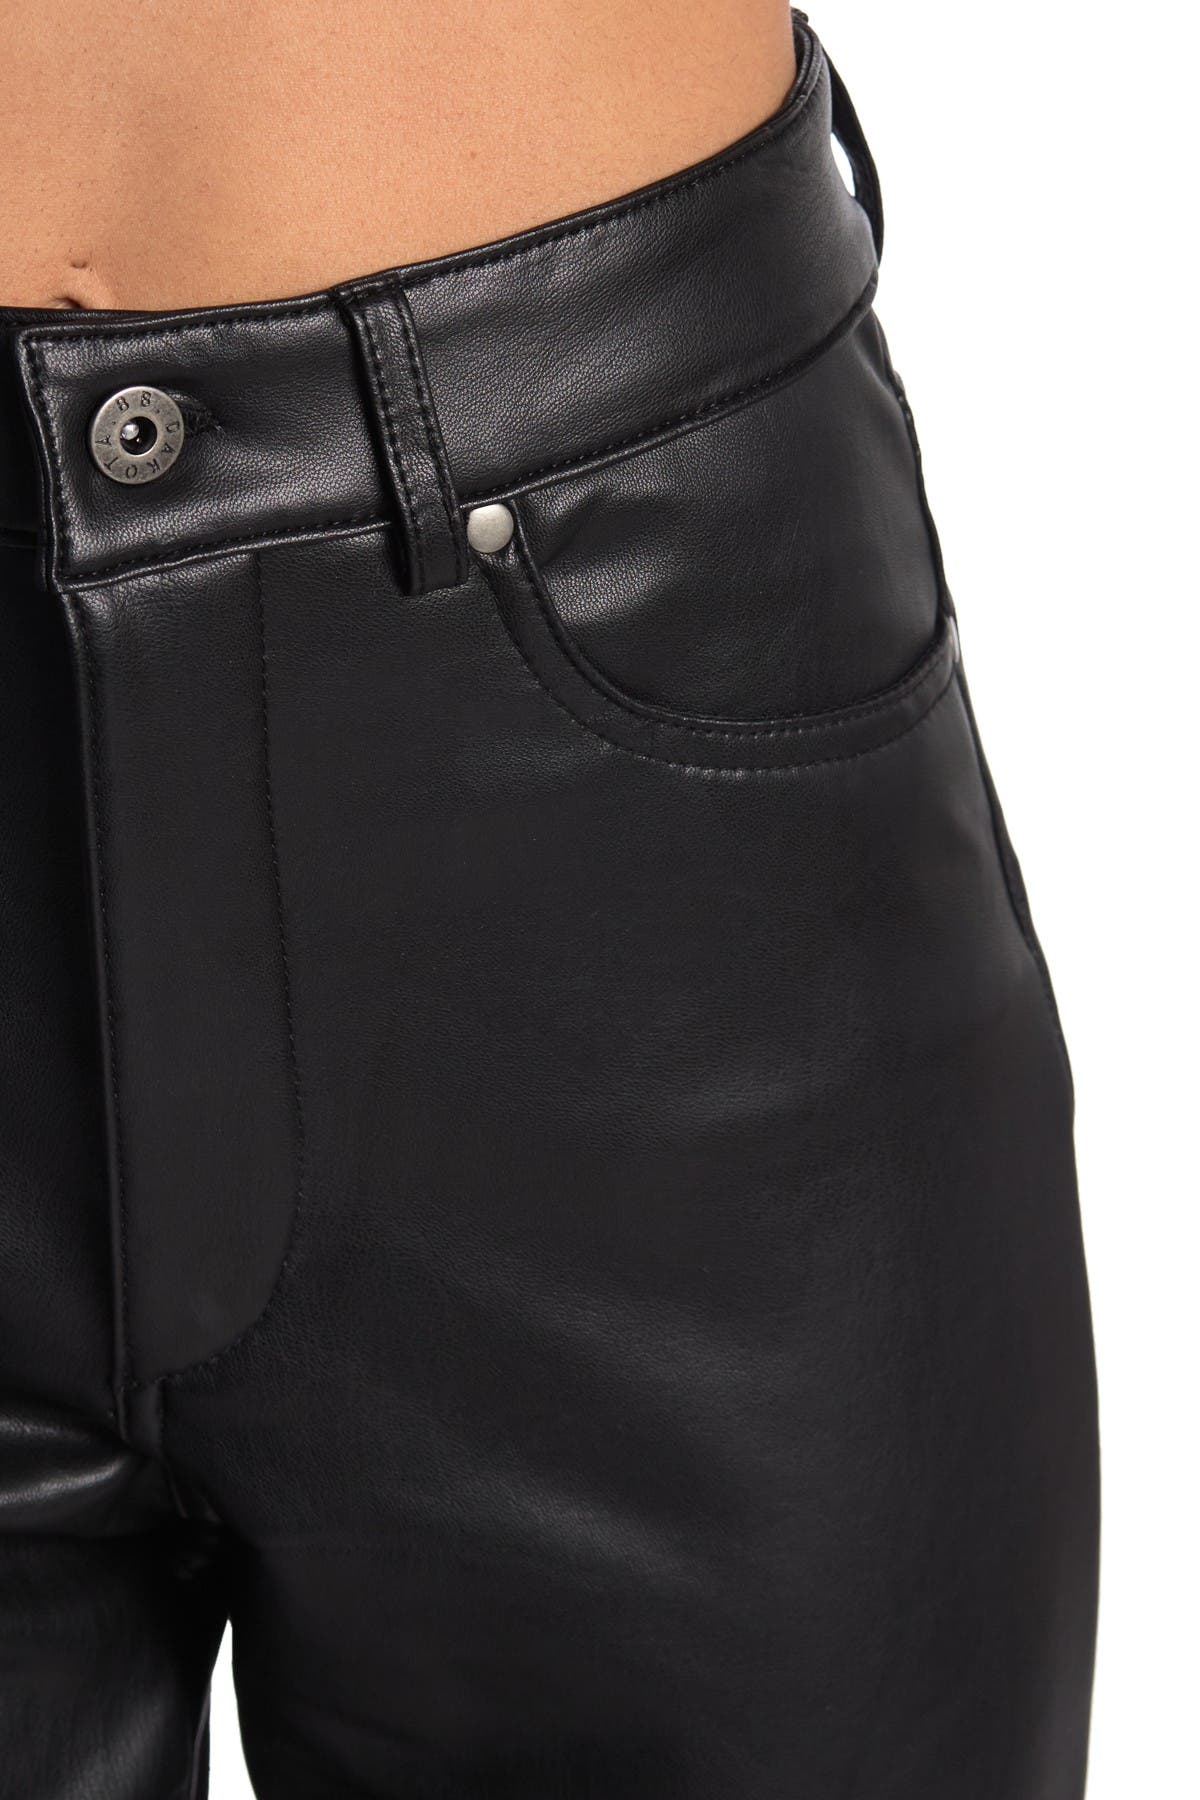 BB Dakota | Morrison Faux Leather Pants | Nordstrom Rack